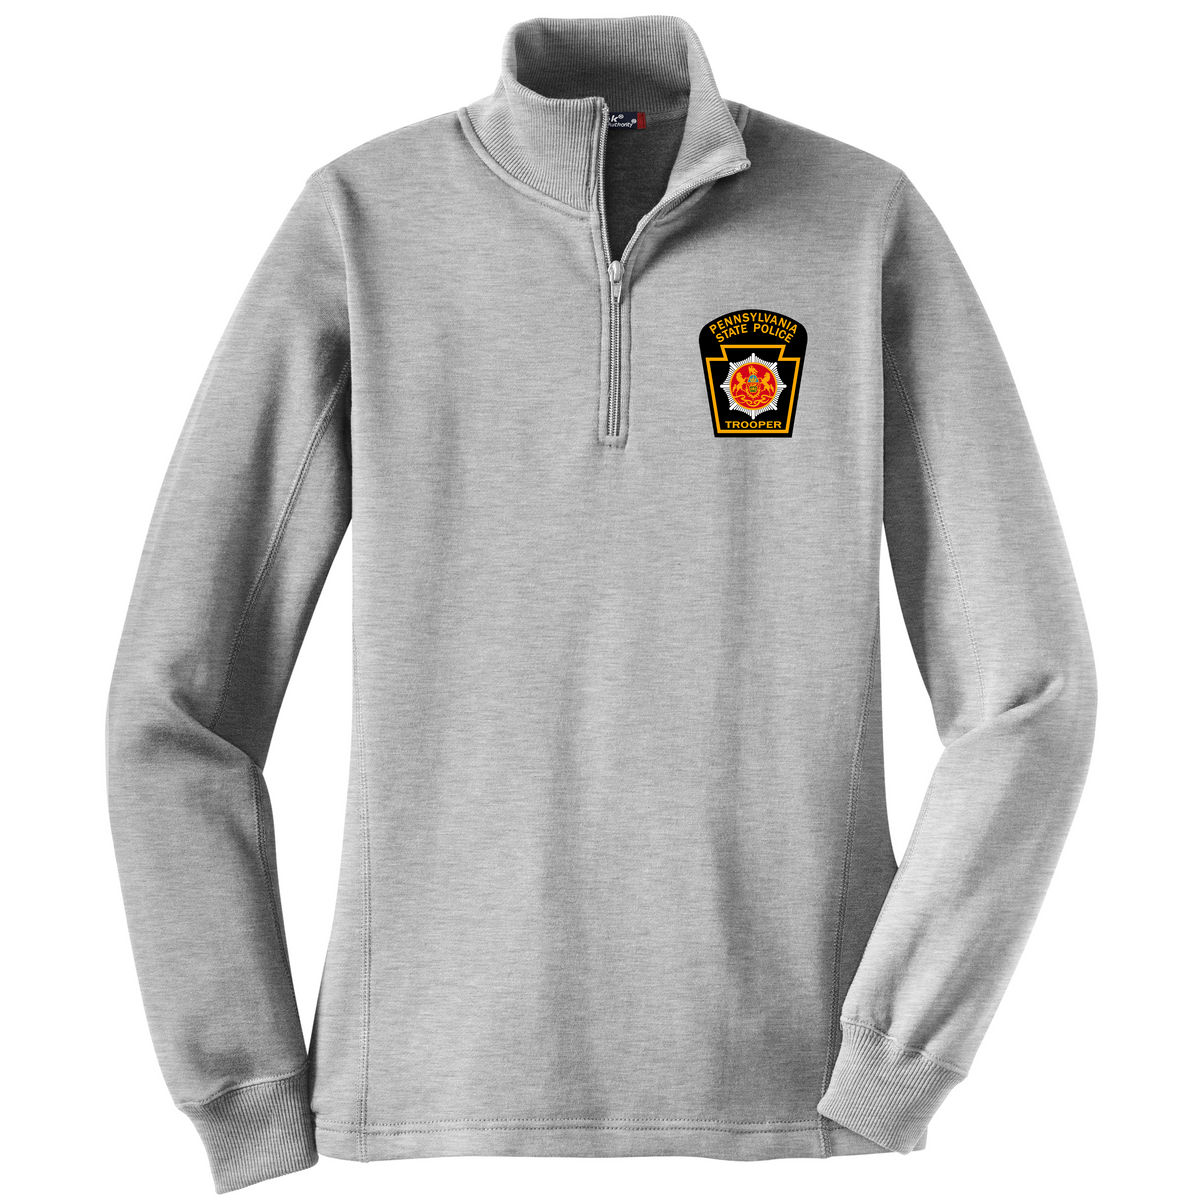 PA State Police Women's 1/4 Zip Fleece